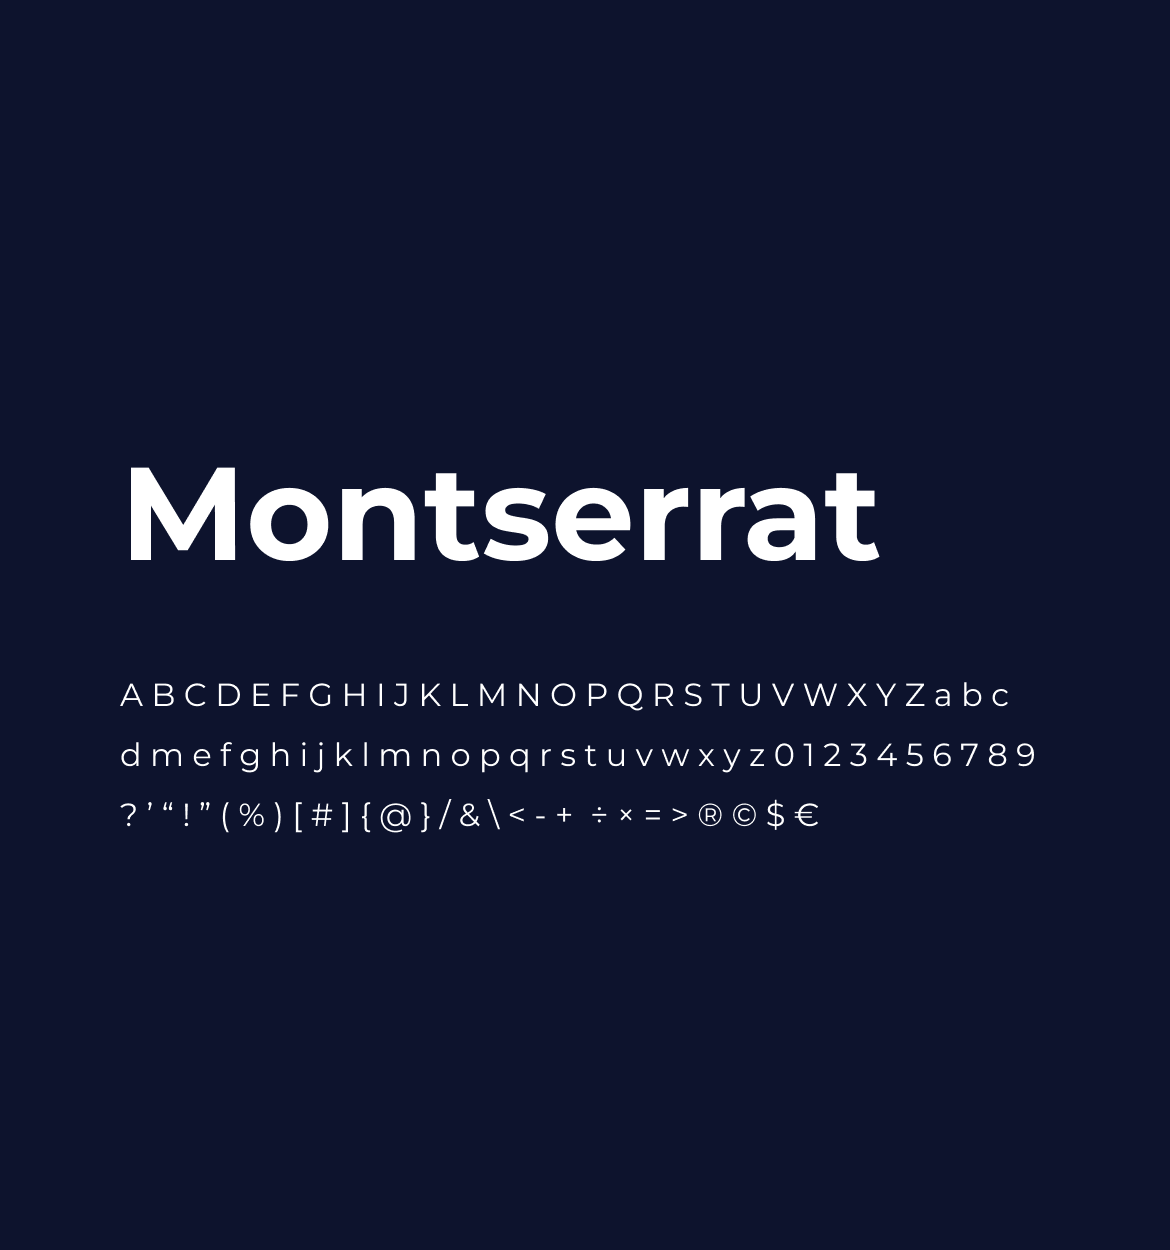 montserrat font used in ecommerce design dark background font in light